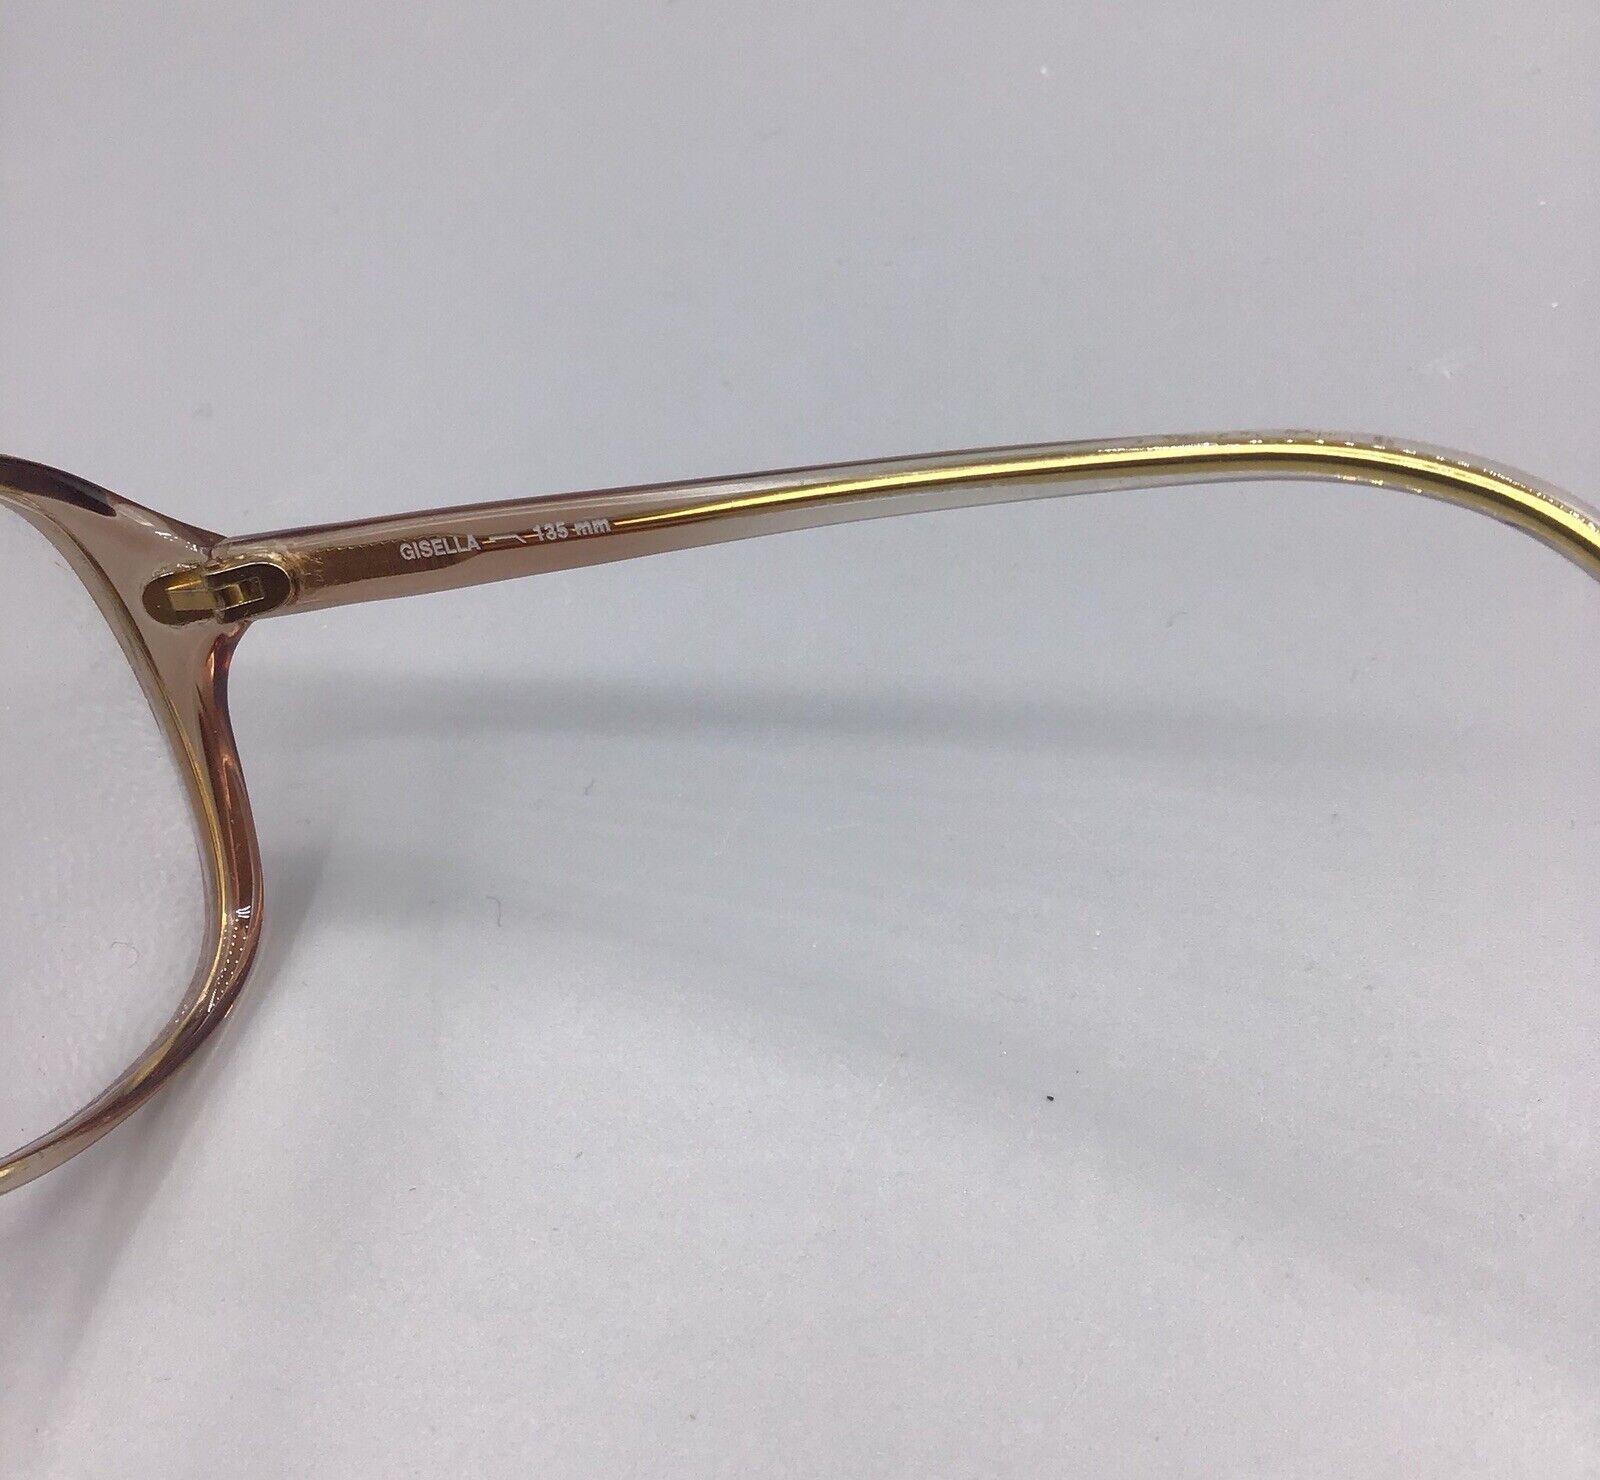 Morwen occhiale vintage eyewear frame italy col. 821 FILO DE ORO model GISELLA brillen